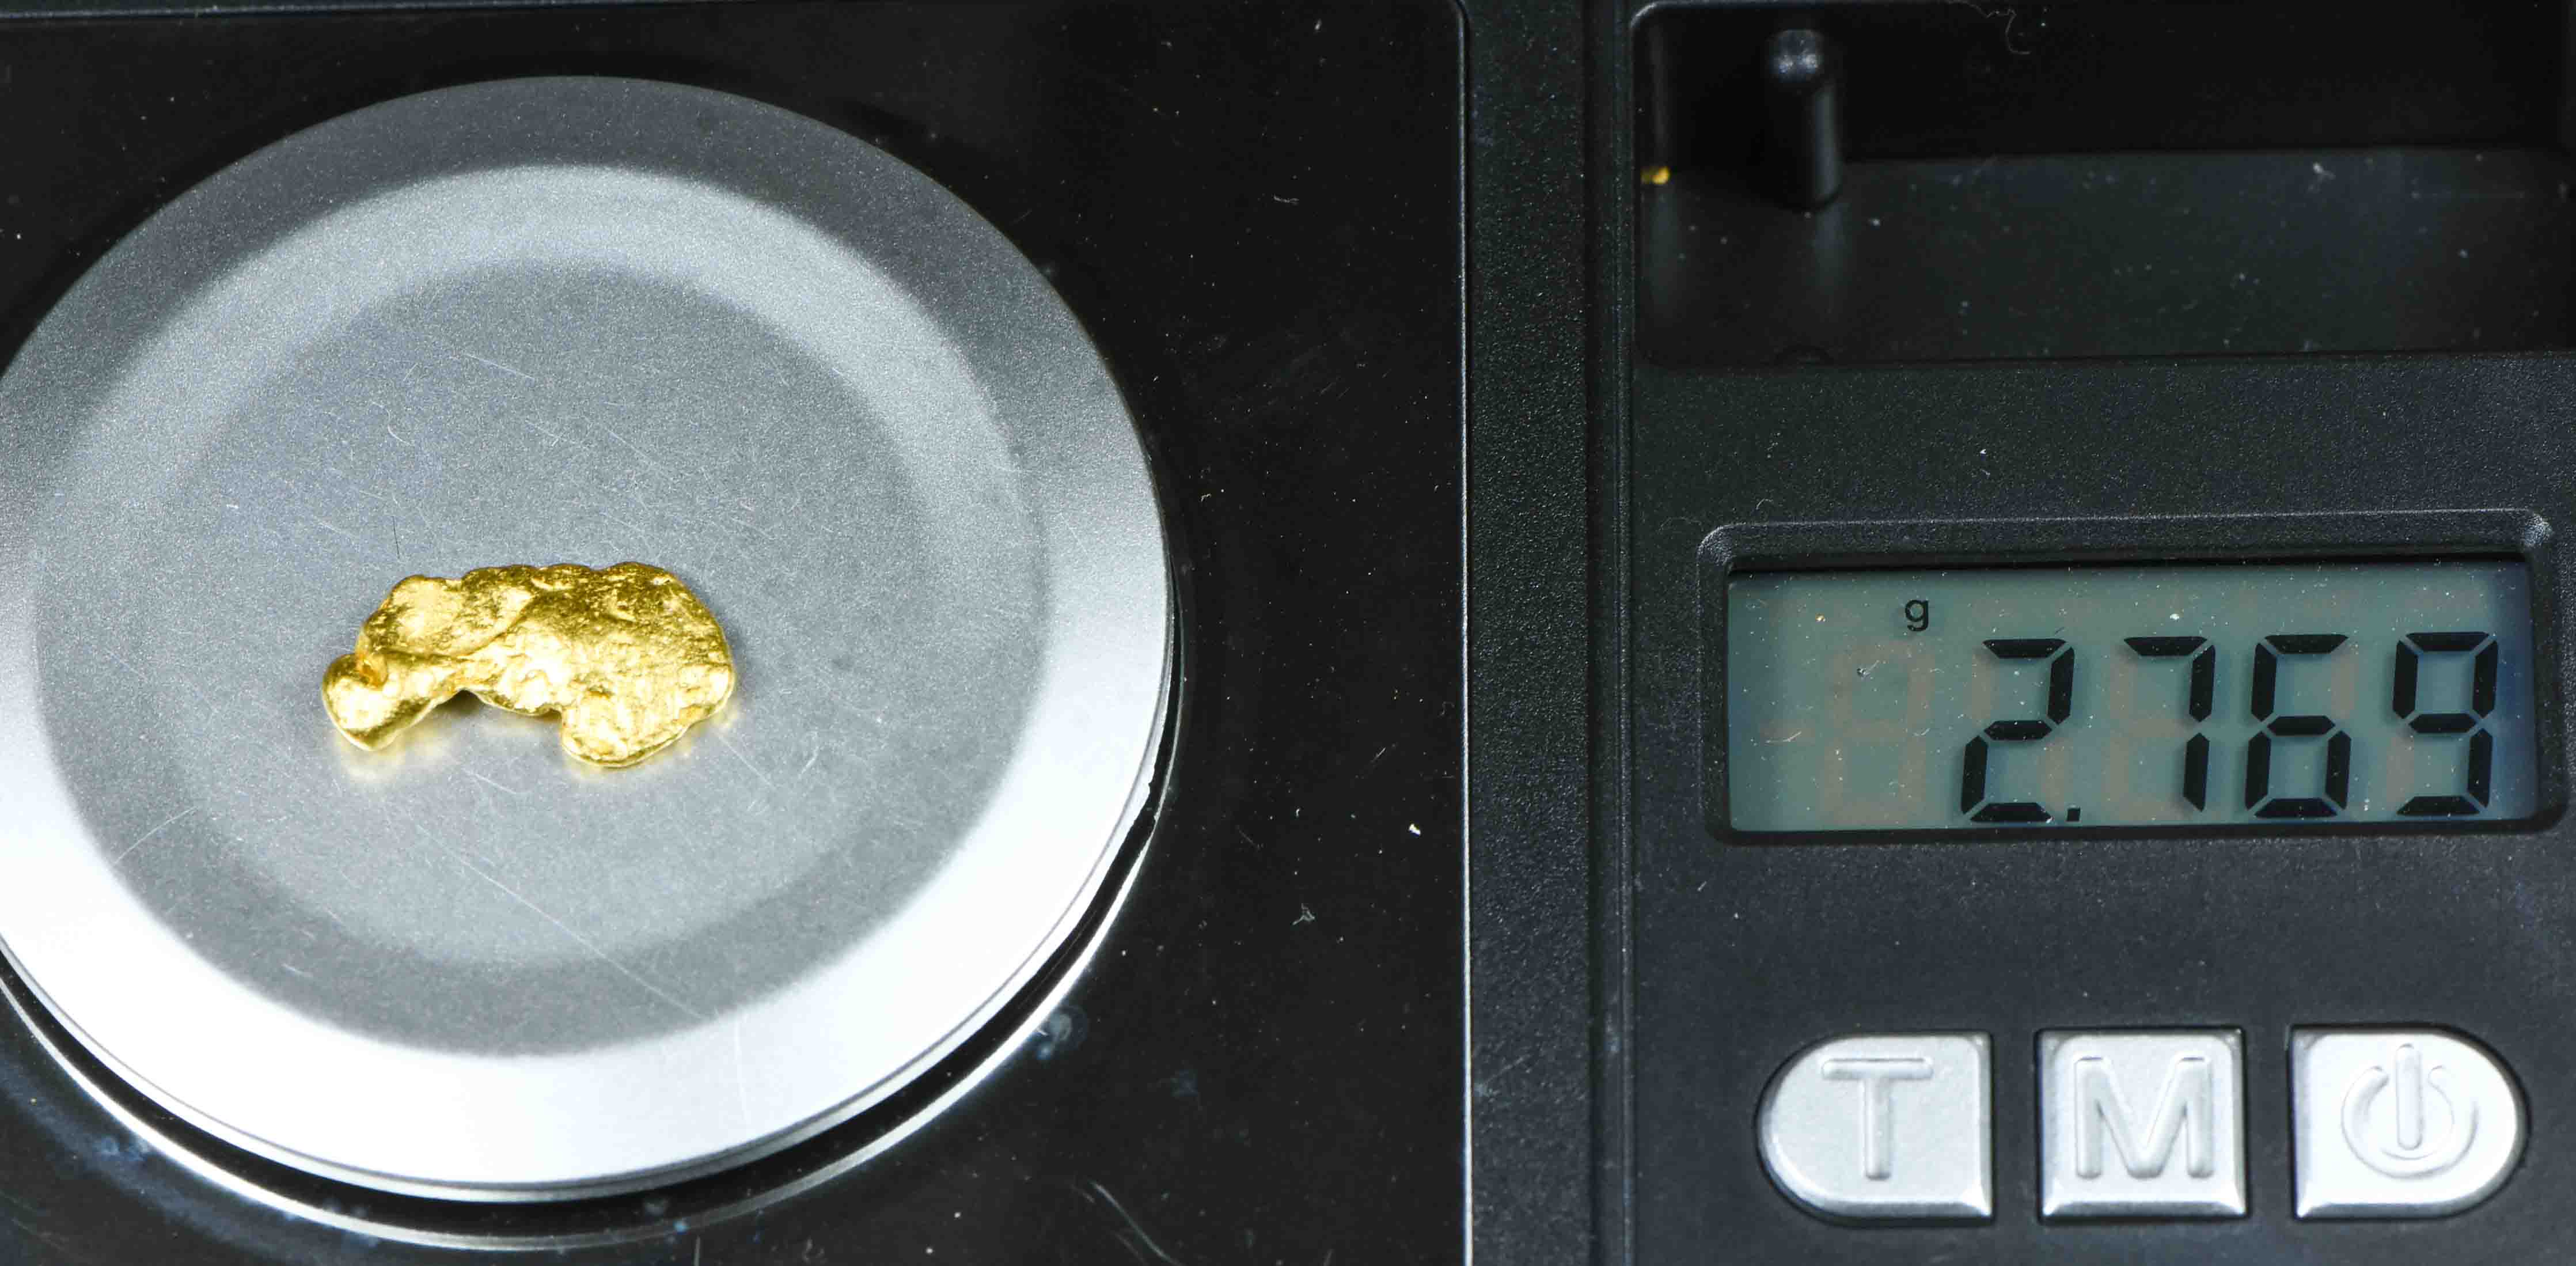 #915 Natural Gold Nugget Australian 2.76 Grams Genuine